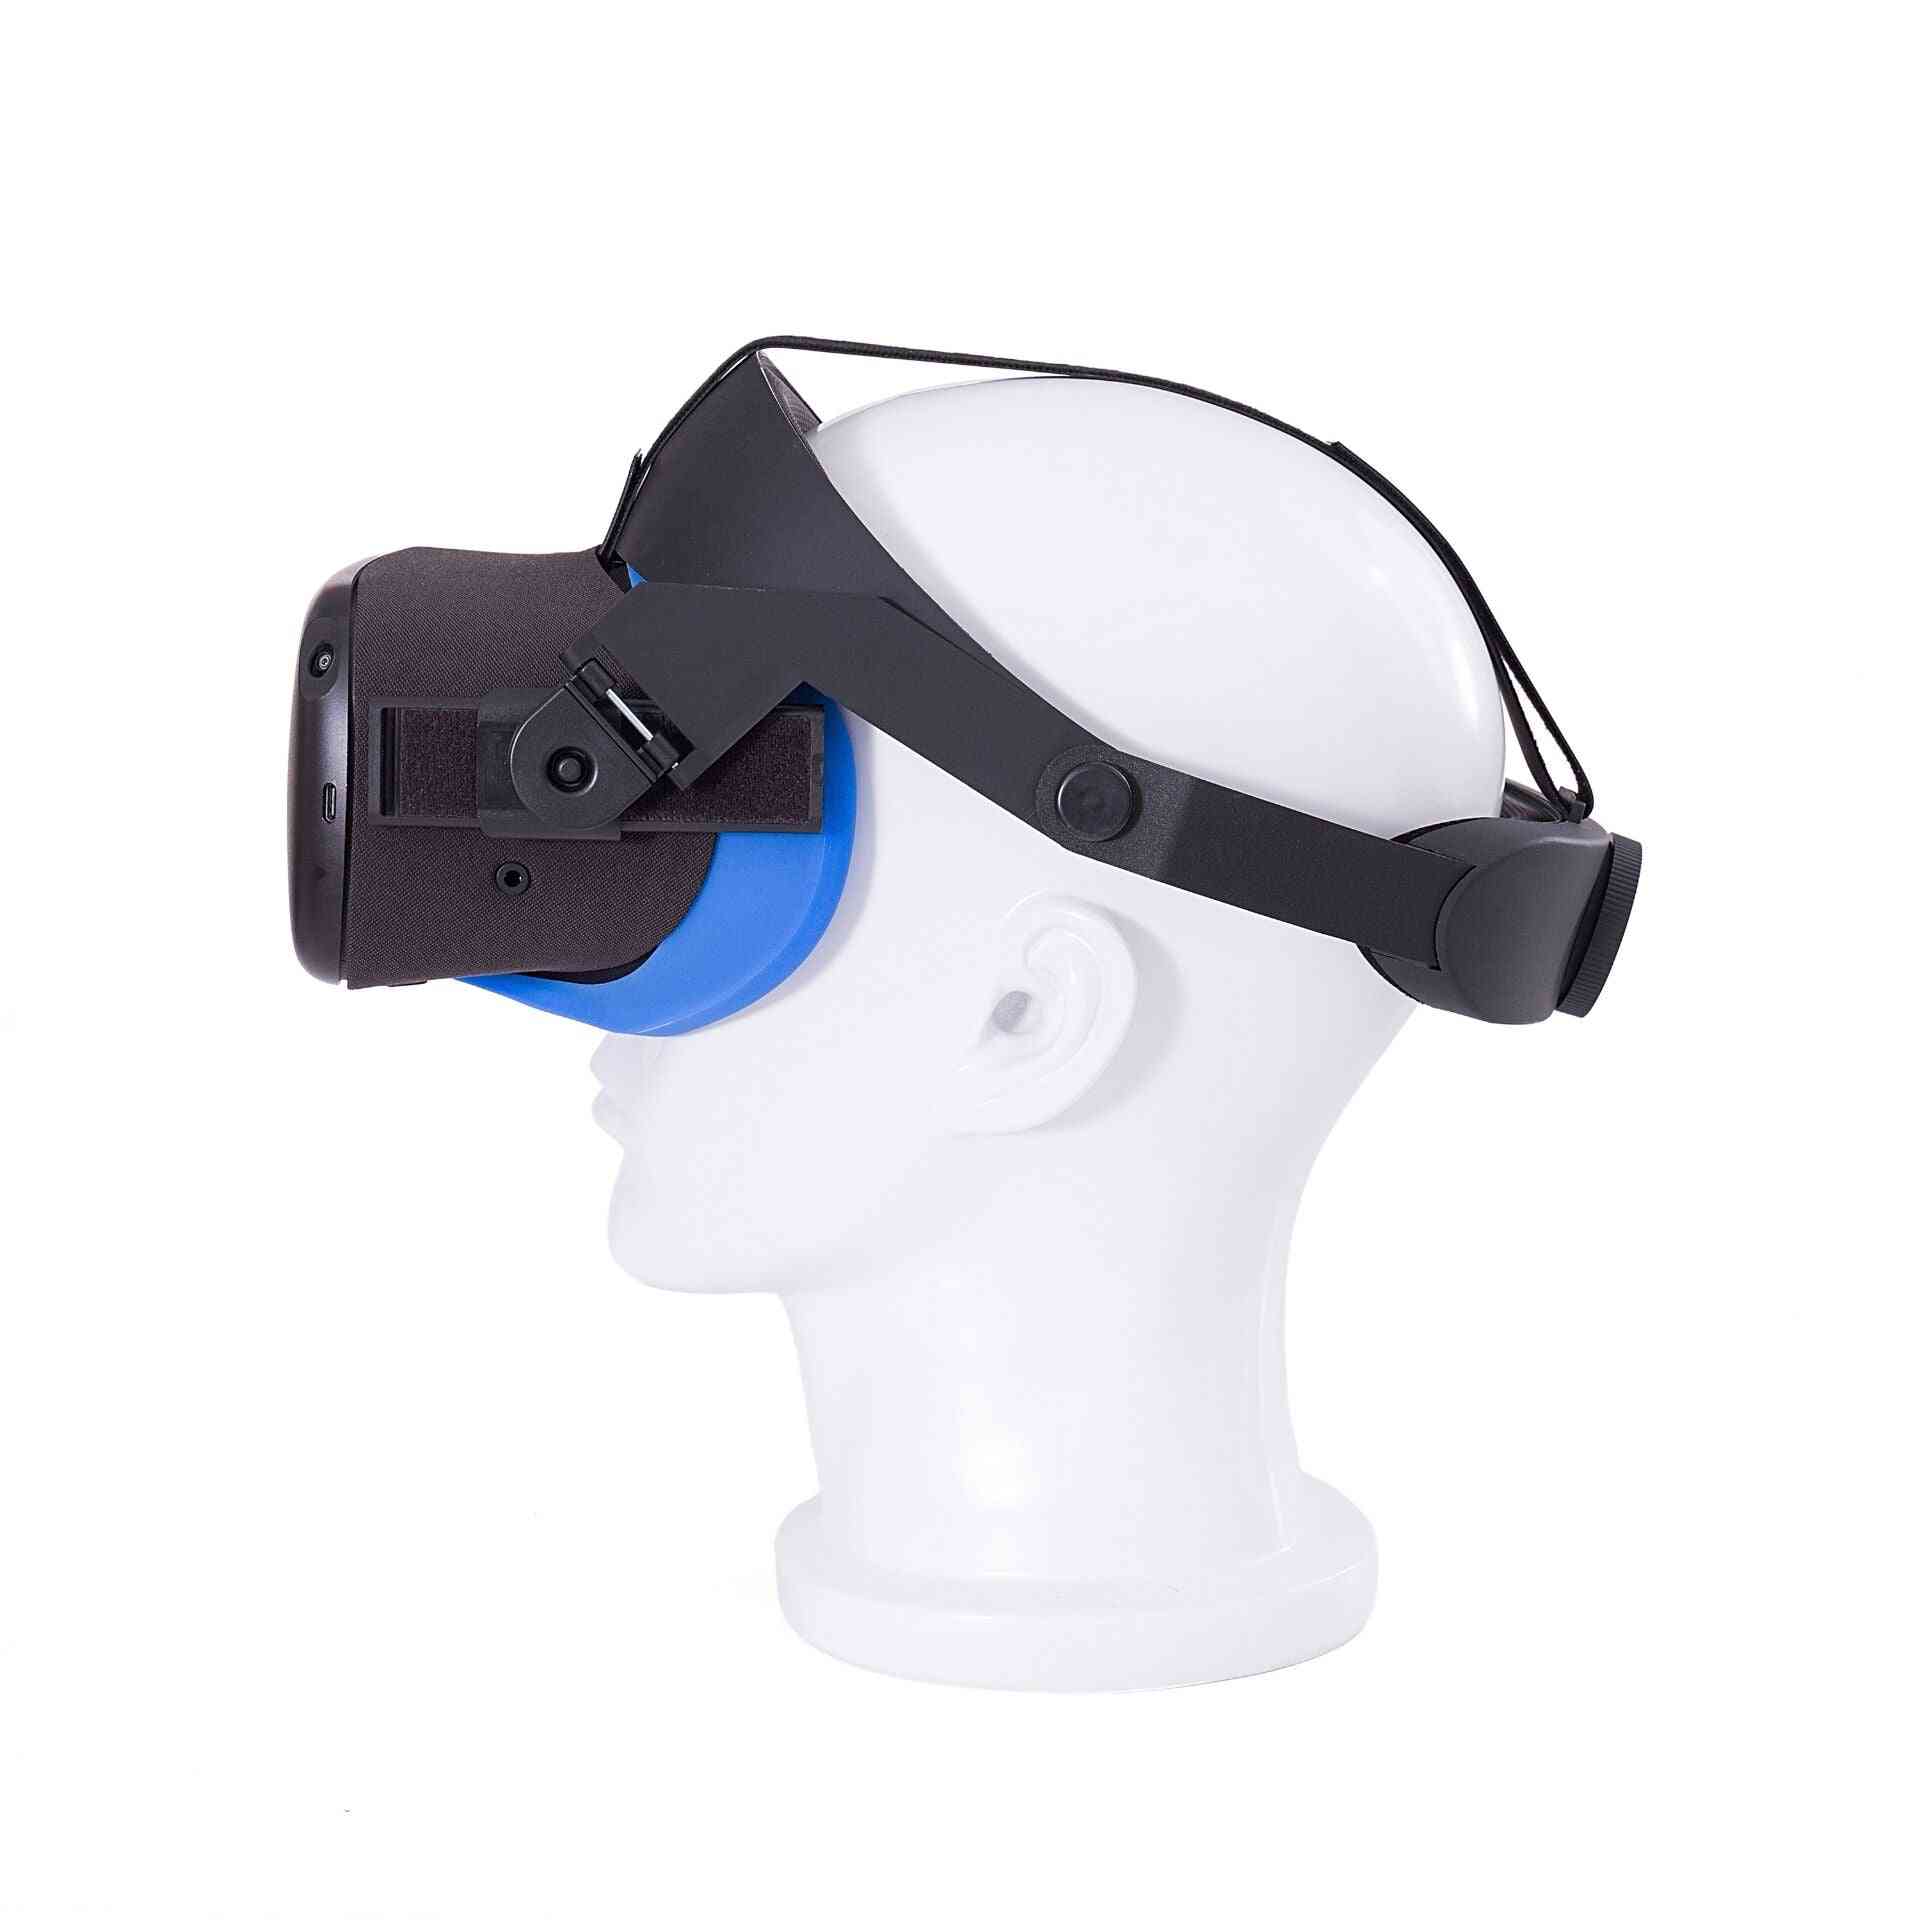 Halo remen ugodan i prilagodljiv, pokrivala za virtualnu stvarnost